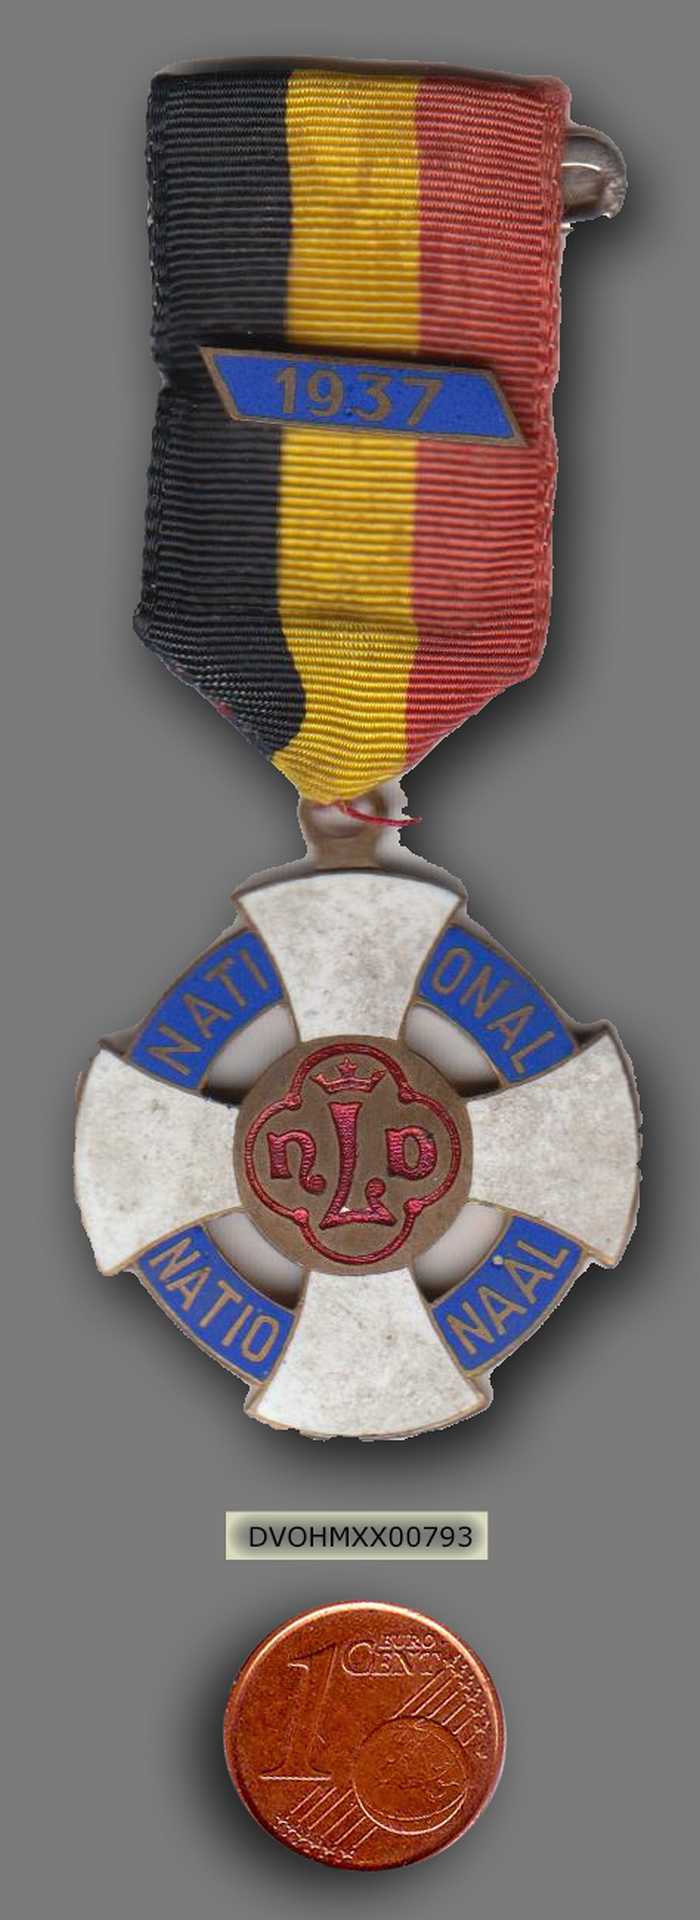 Medaillon n L d - 1937